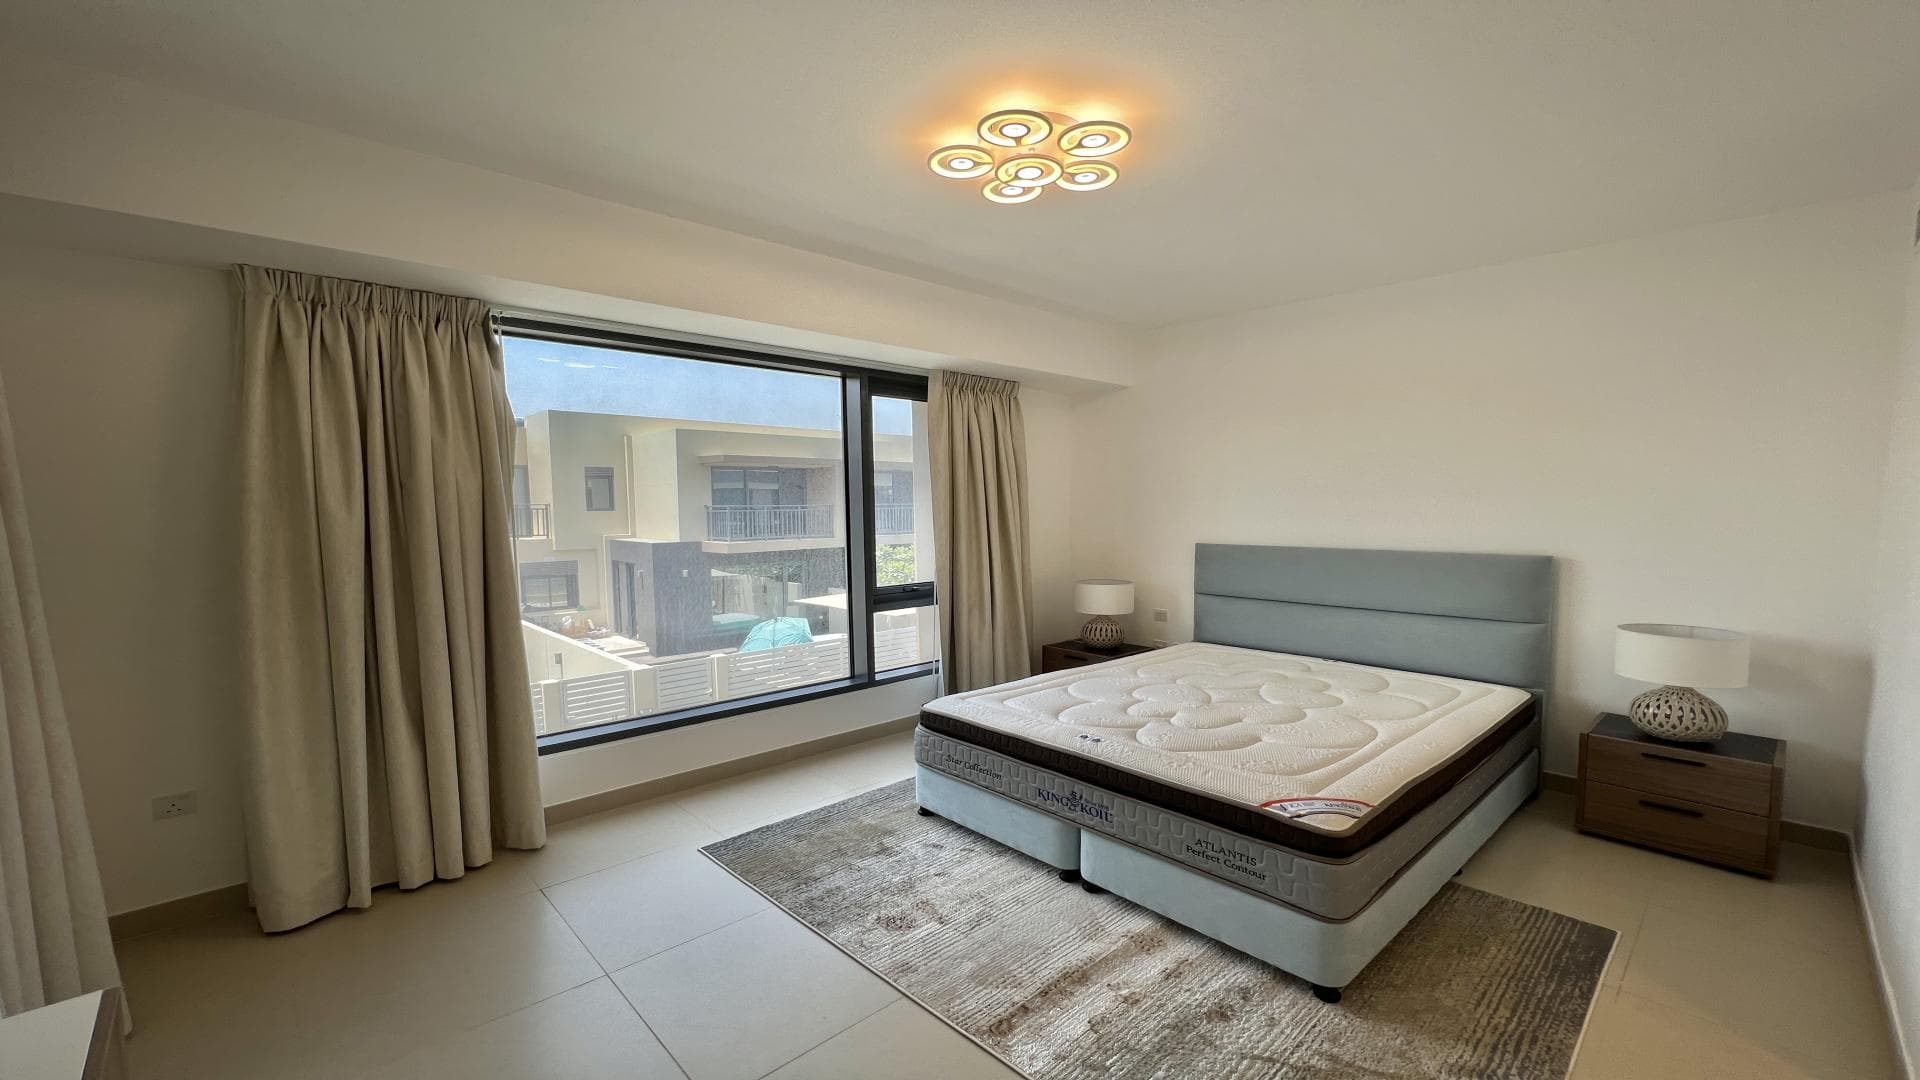 5 Bedroom Townhouse For Rent Marina Residences 6 Lp34566 18cc120babee3000.jpg